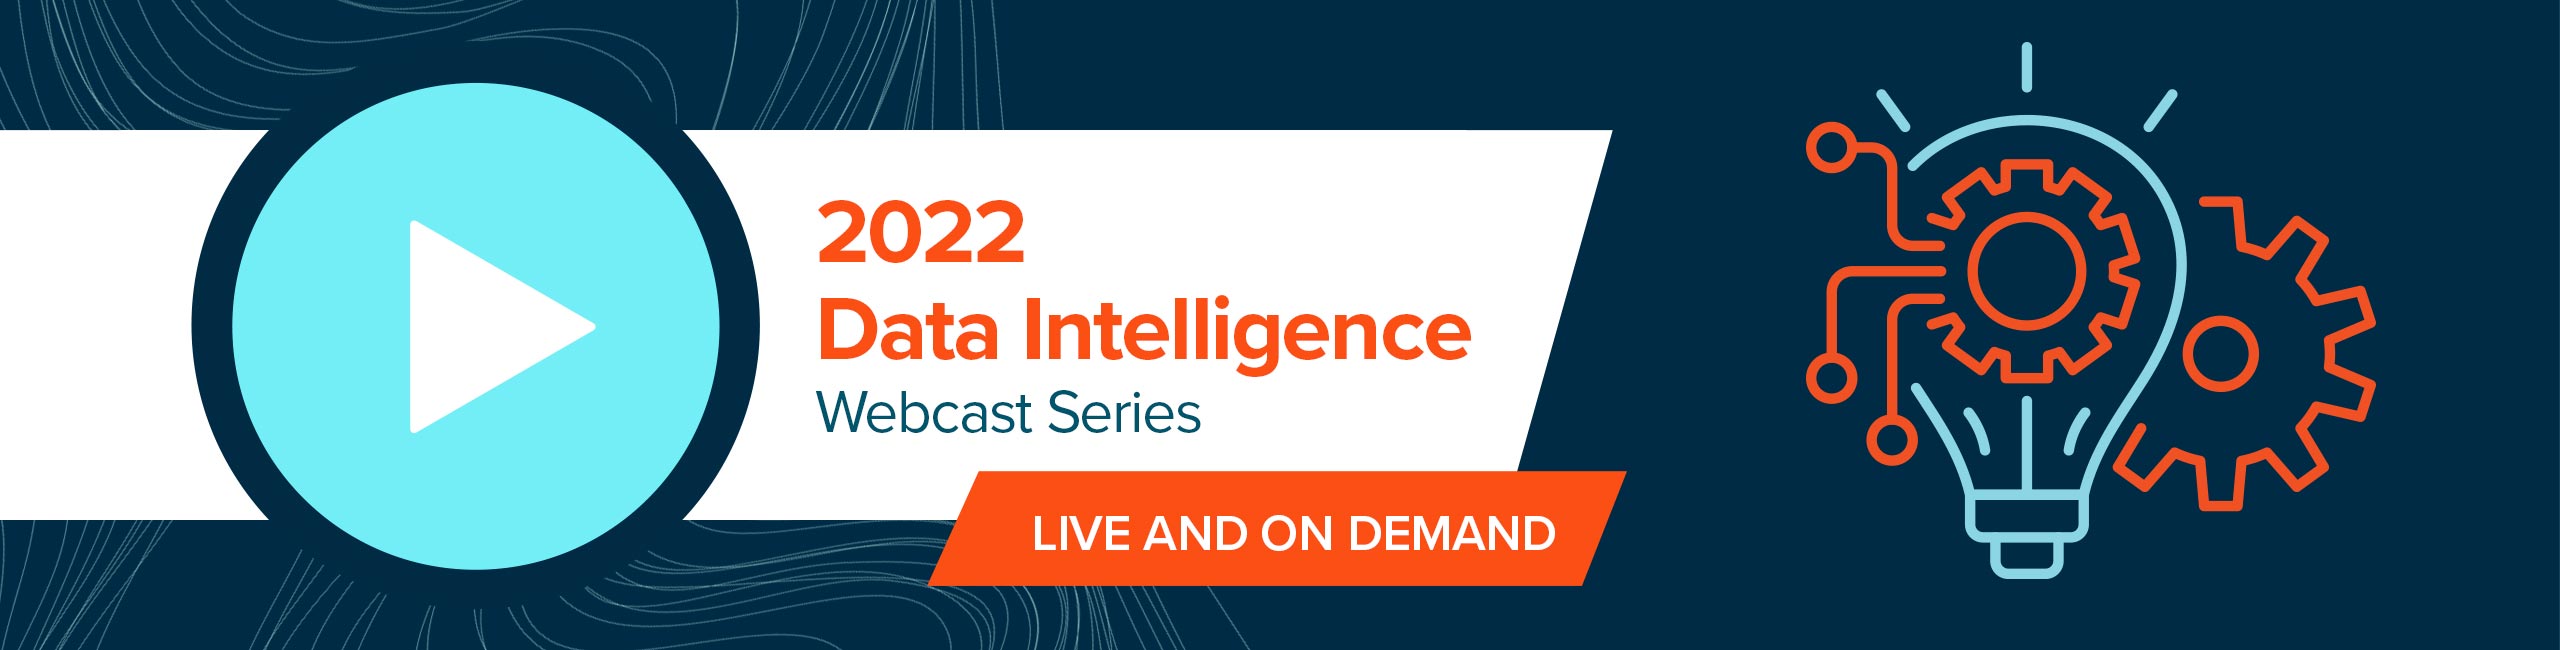 2022 Data Intelligence Webcast Series